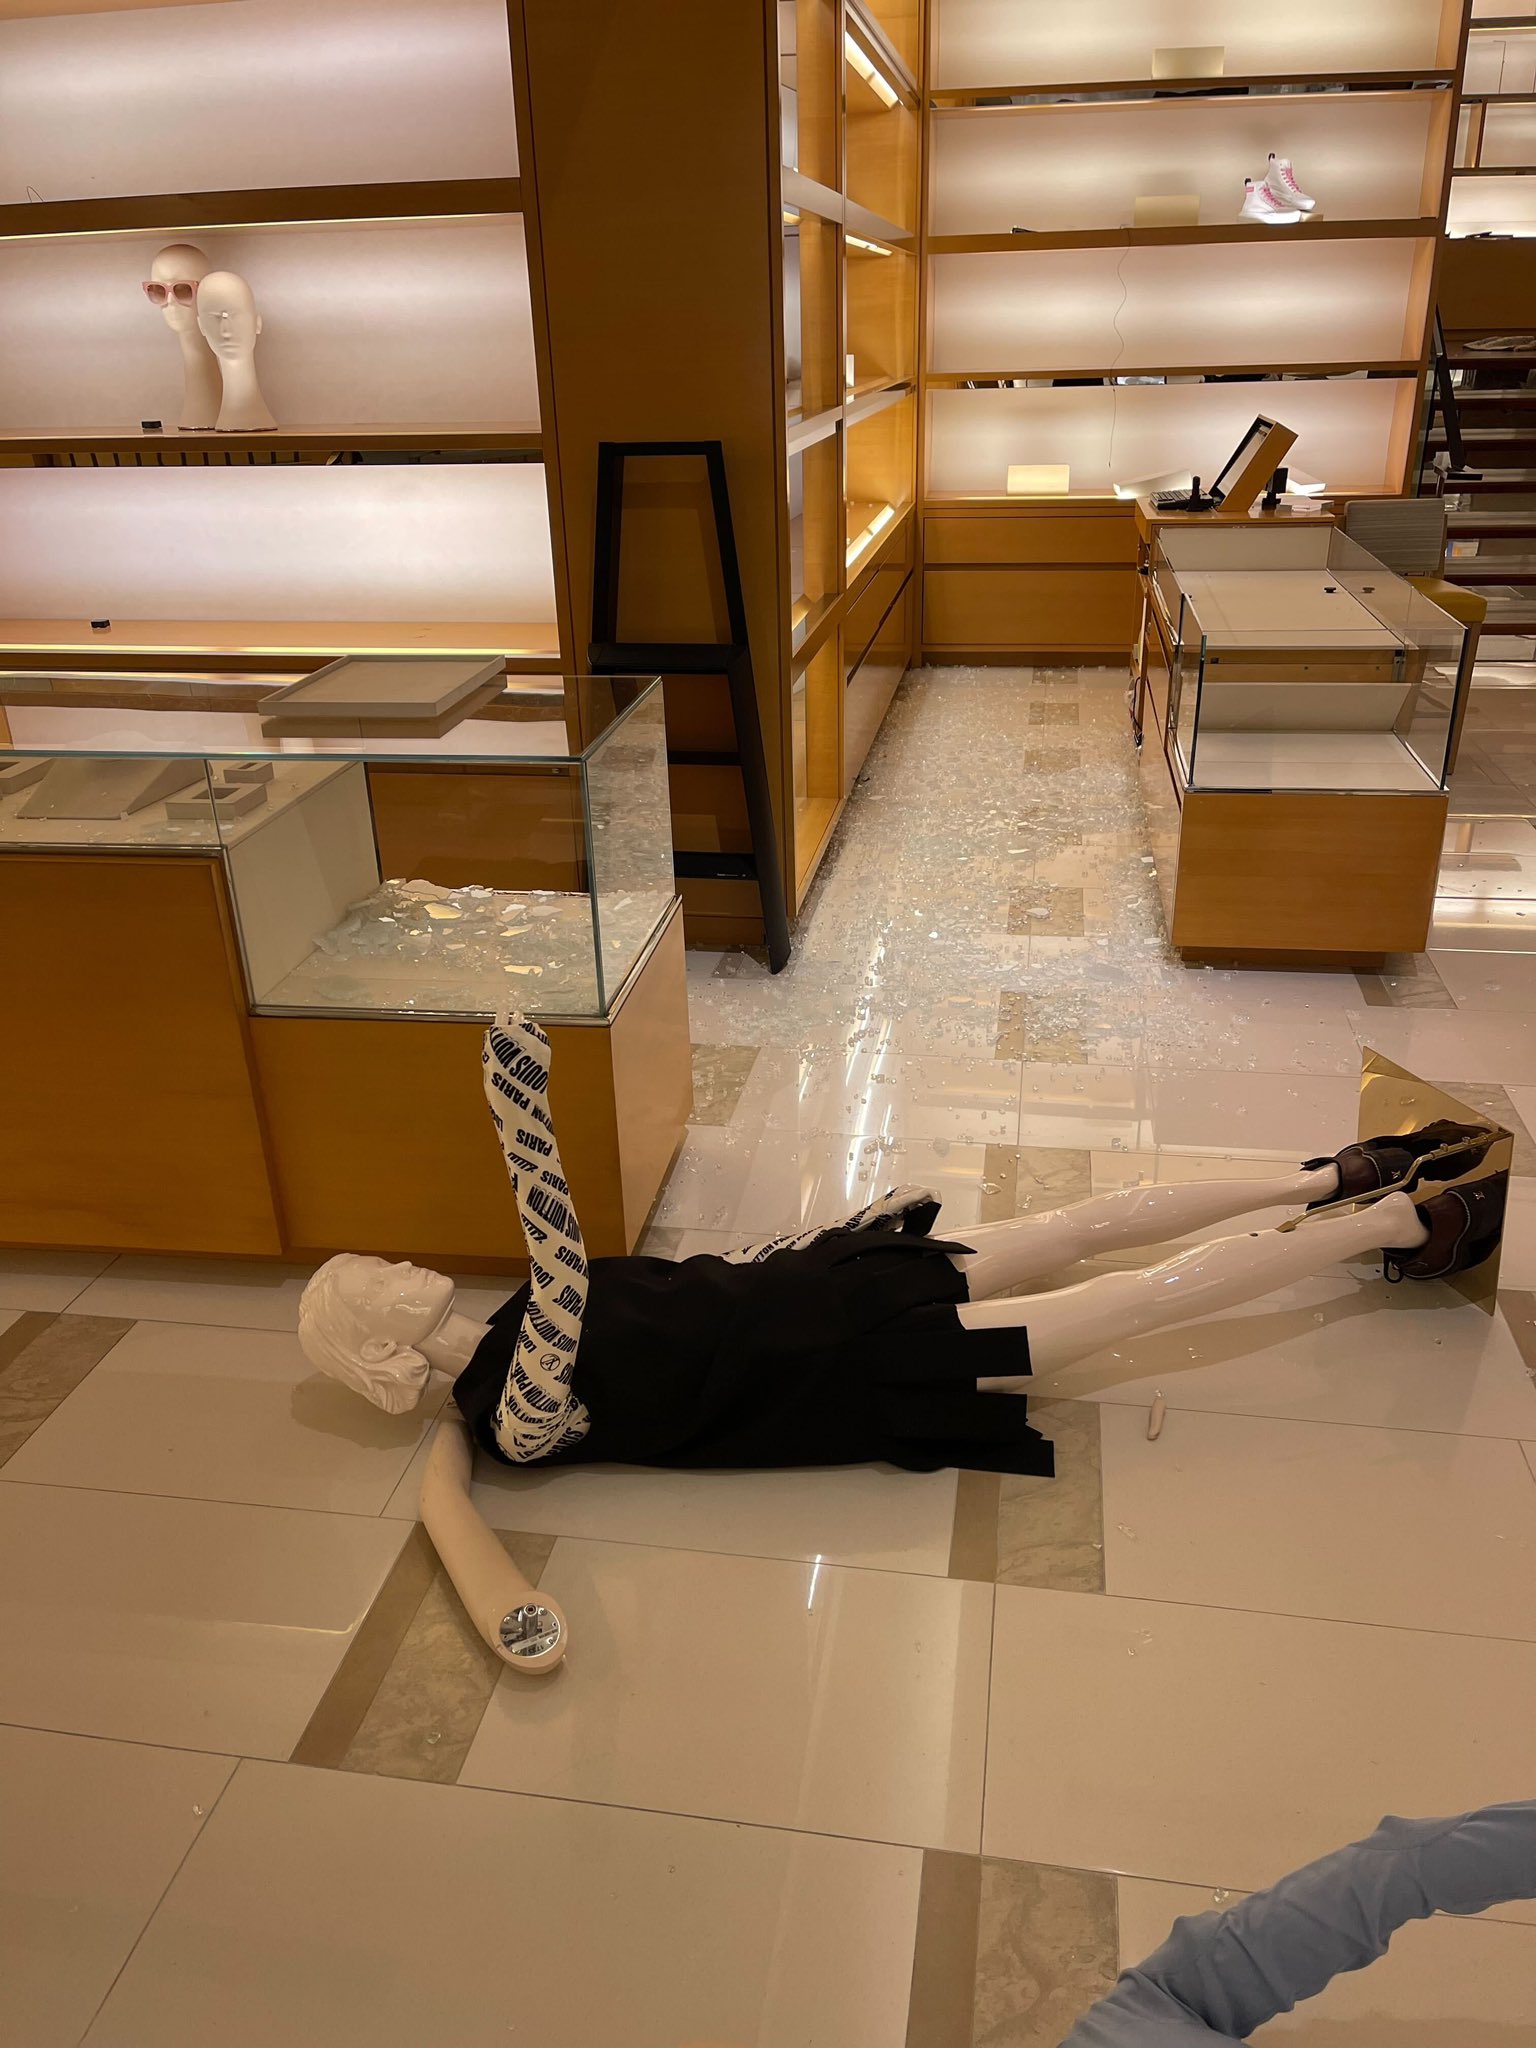 Louis Vuitton Store Robbed in San Francisco's Union Square – NBC Bay Area